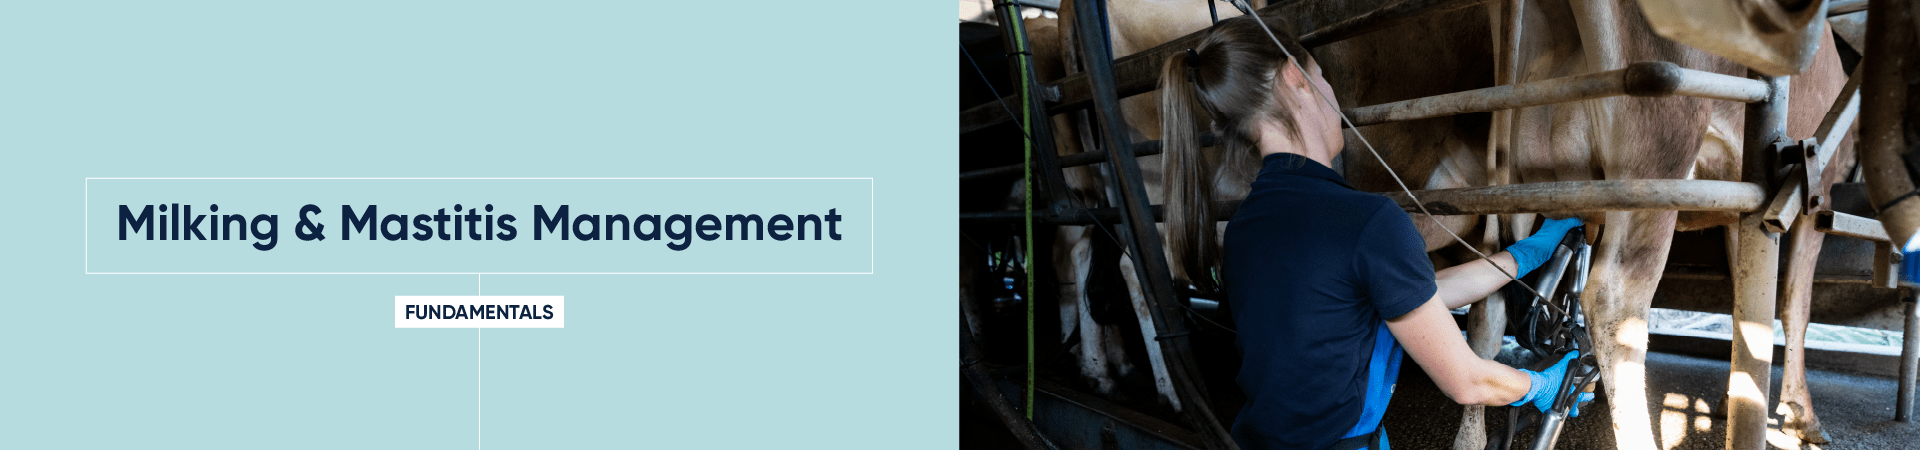 Milking and Mastitis Management (Fundamentals)